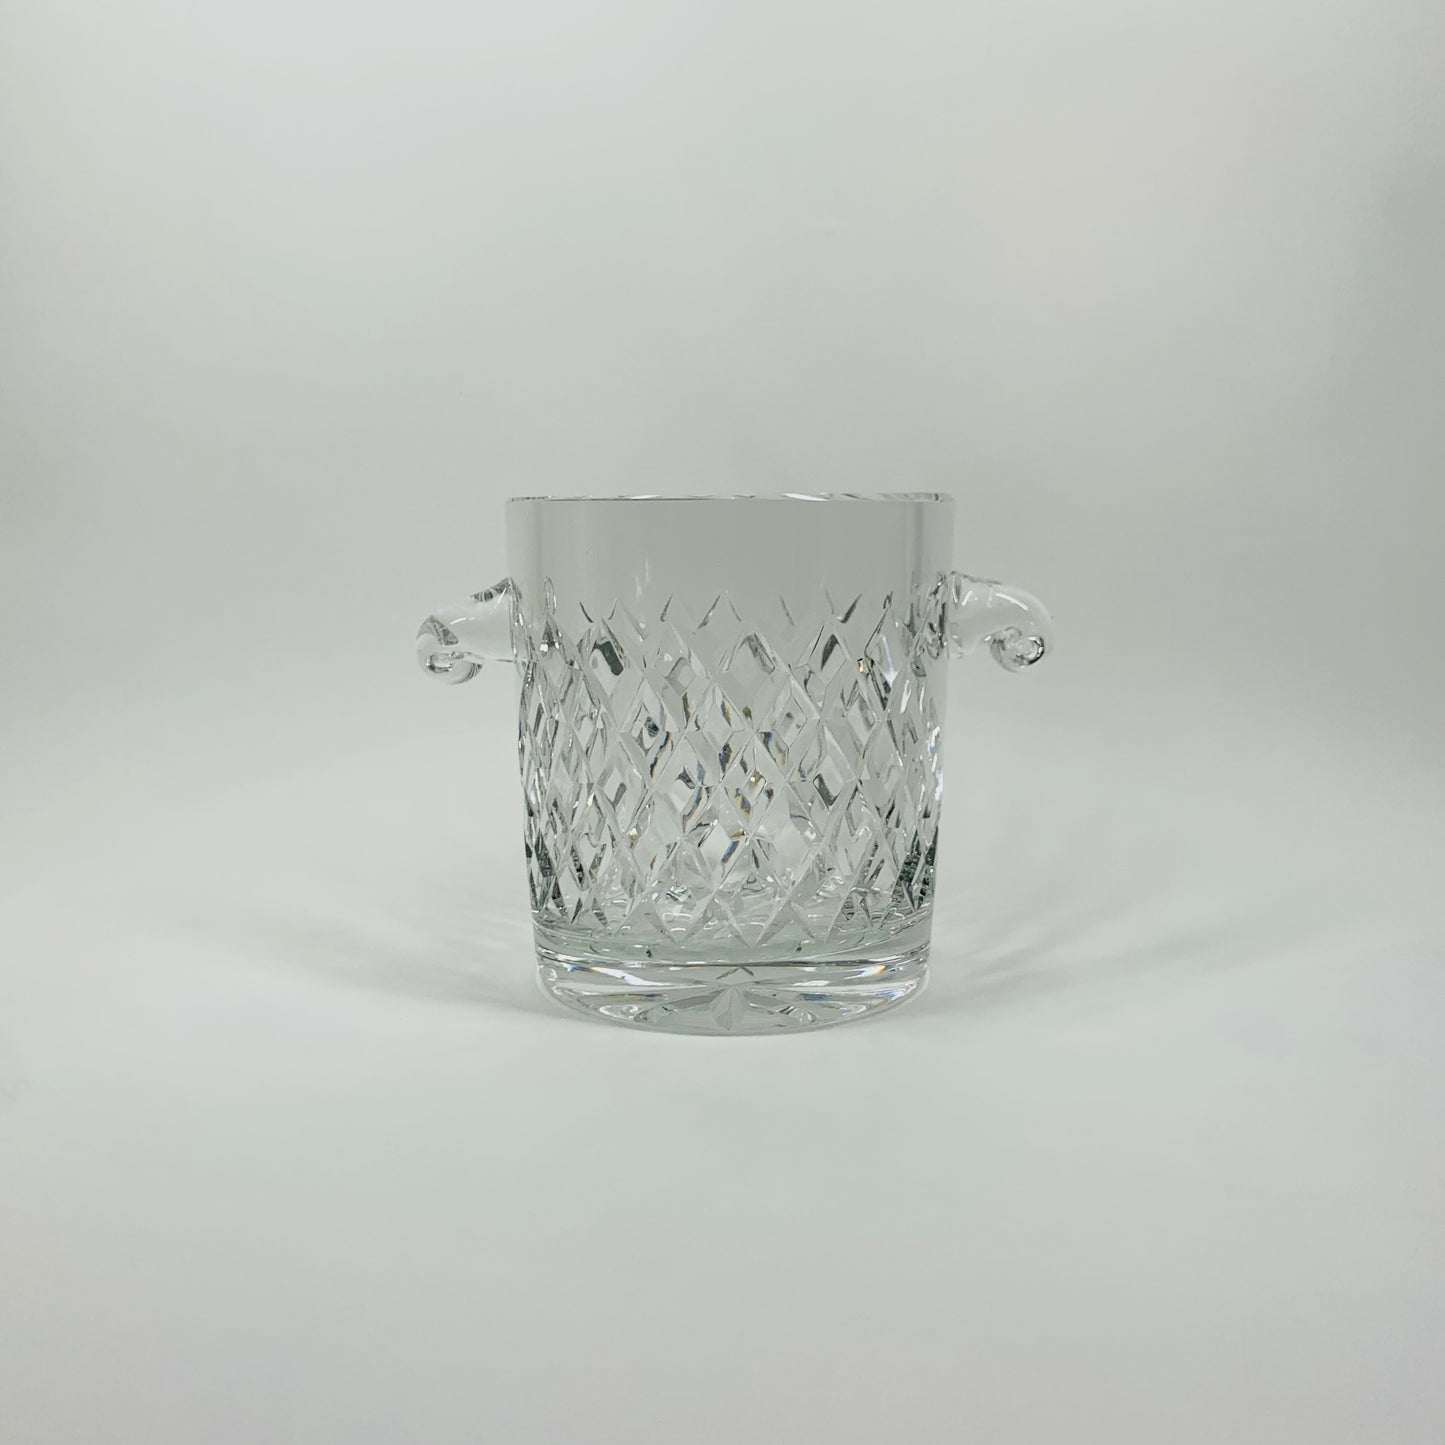 Antique hand cut crystal ice bucket